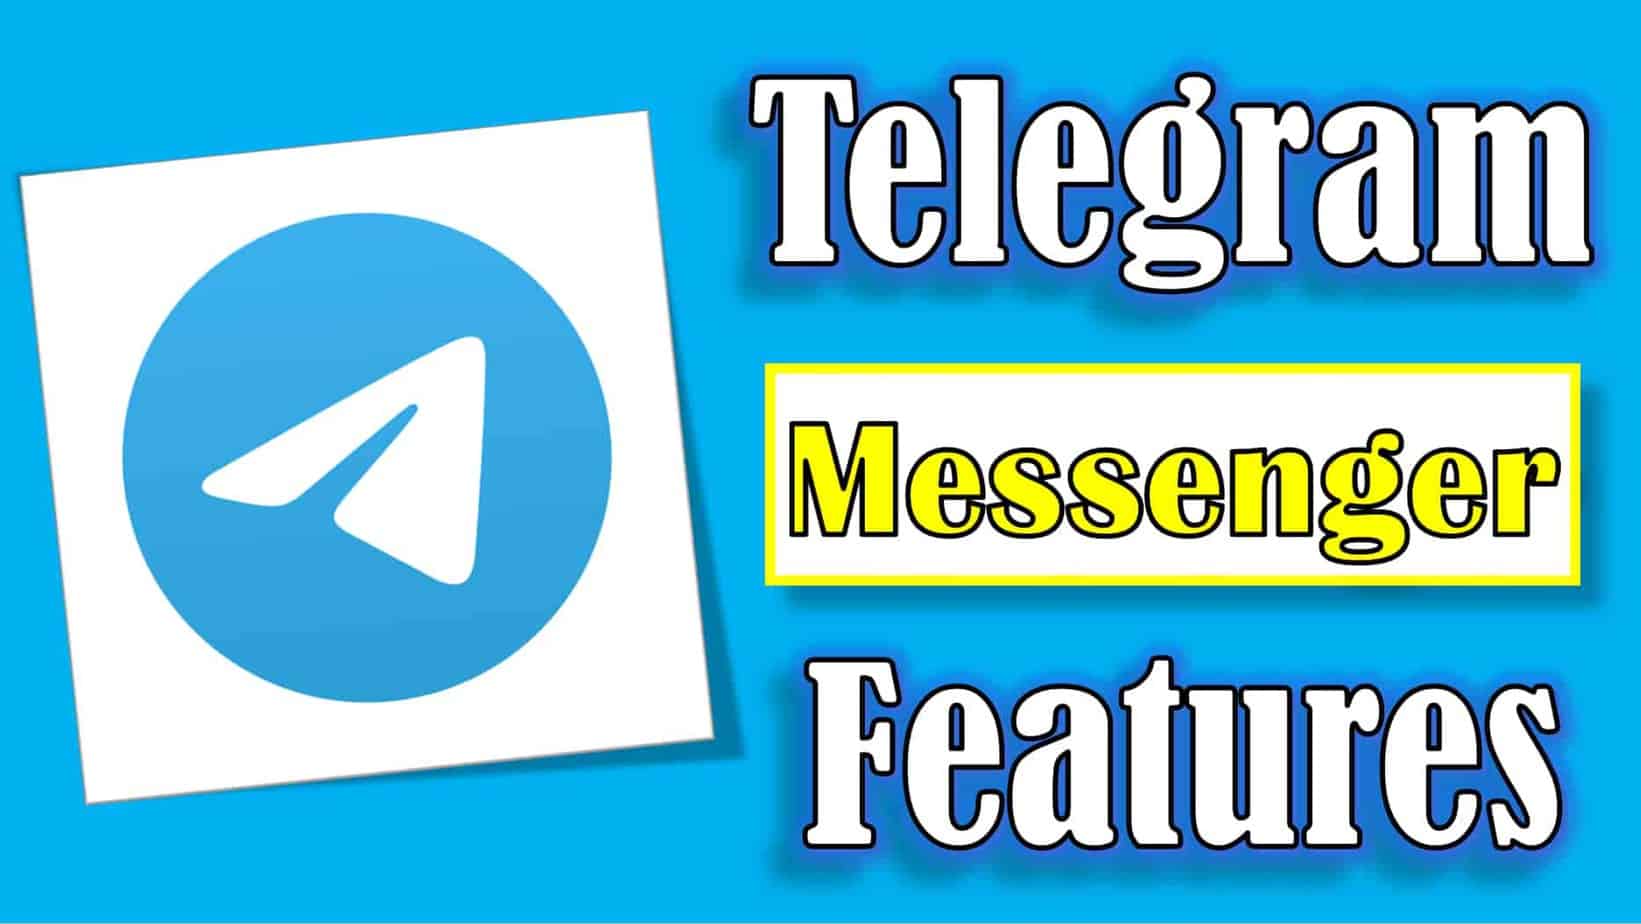 telegram app online